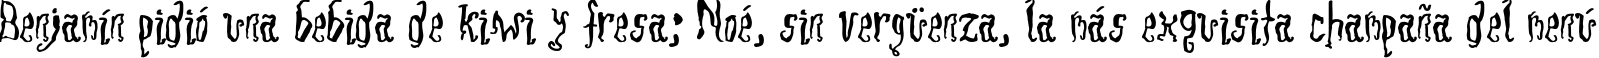 Пример написания шрифтом SlackScript текста на испанском